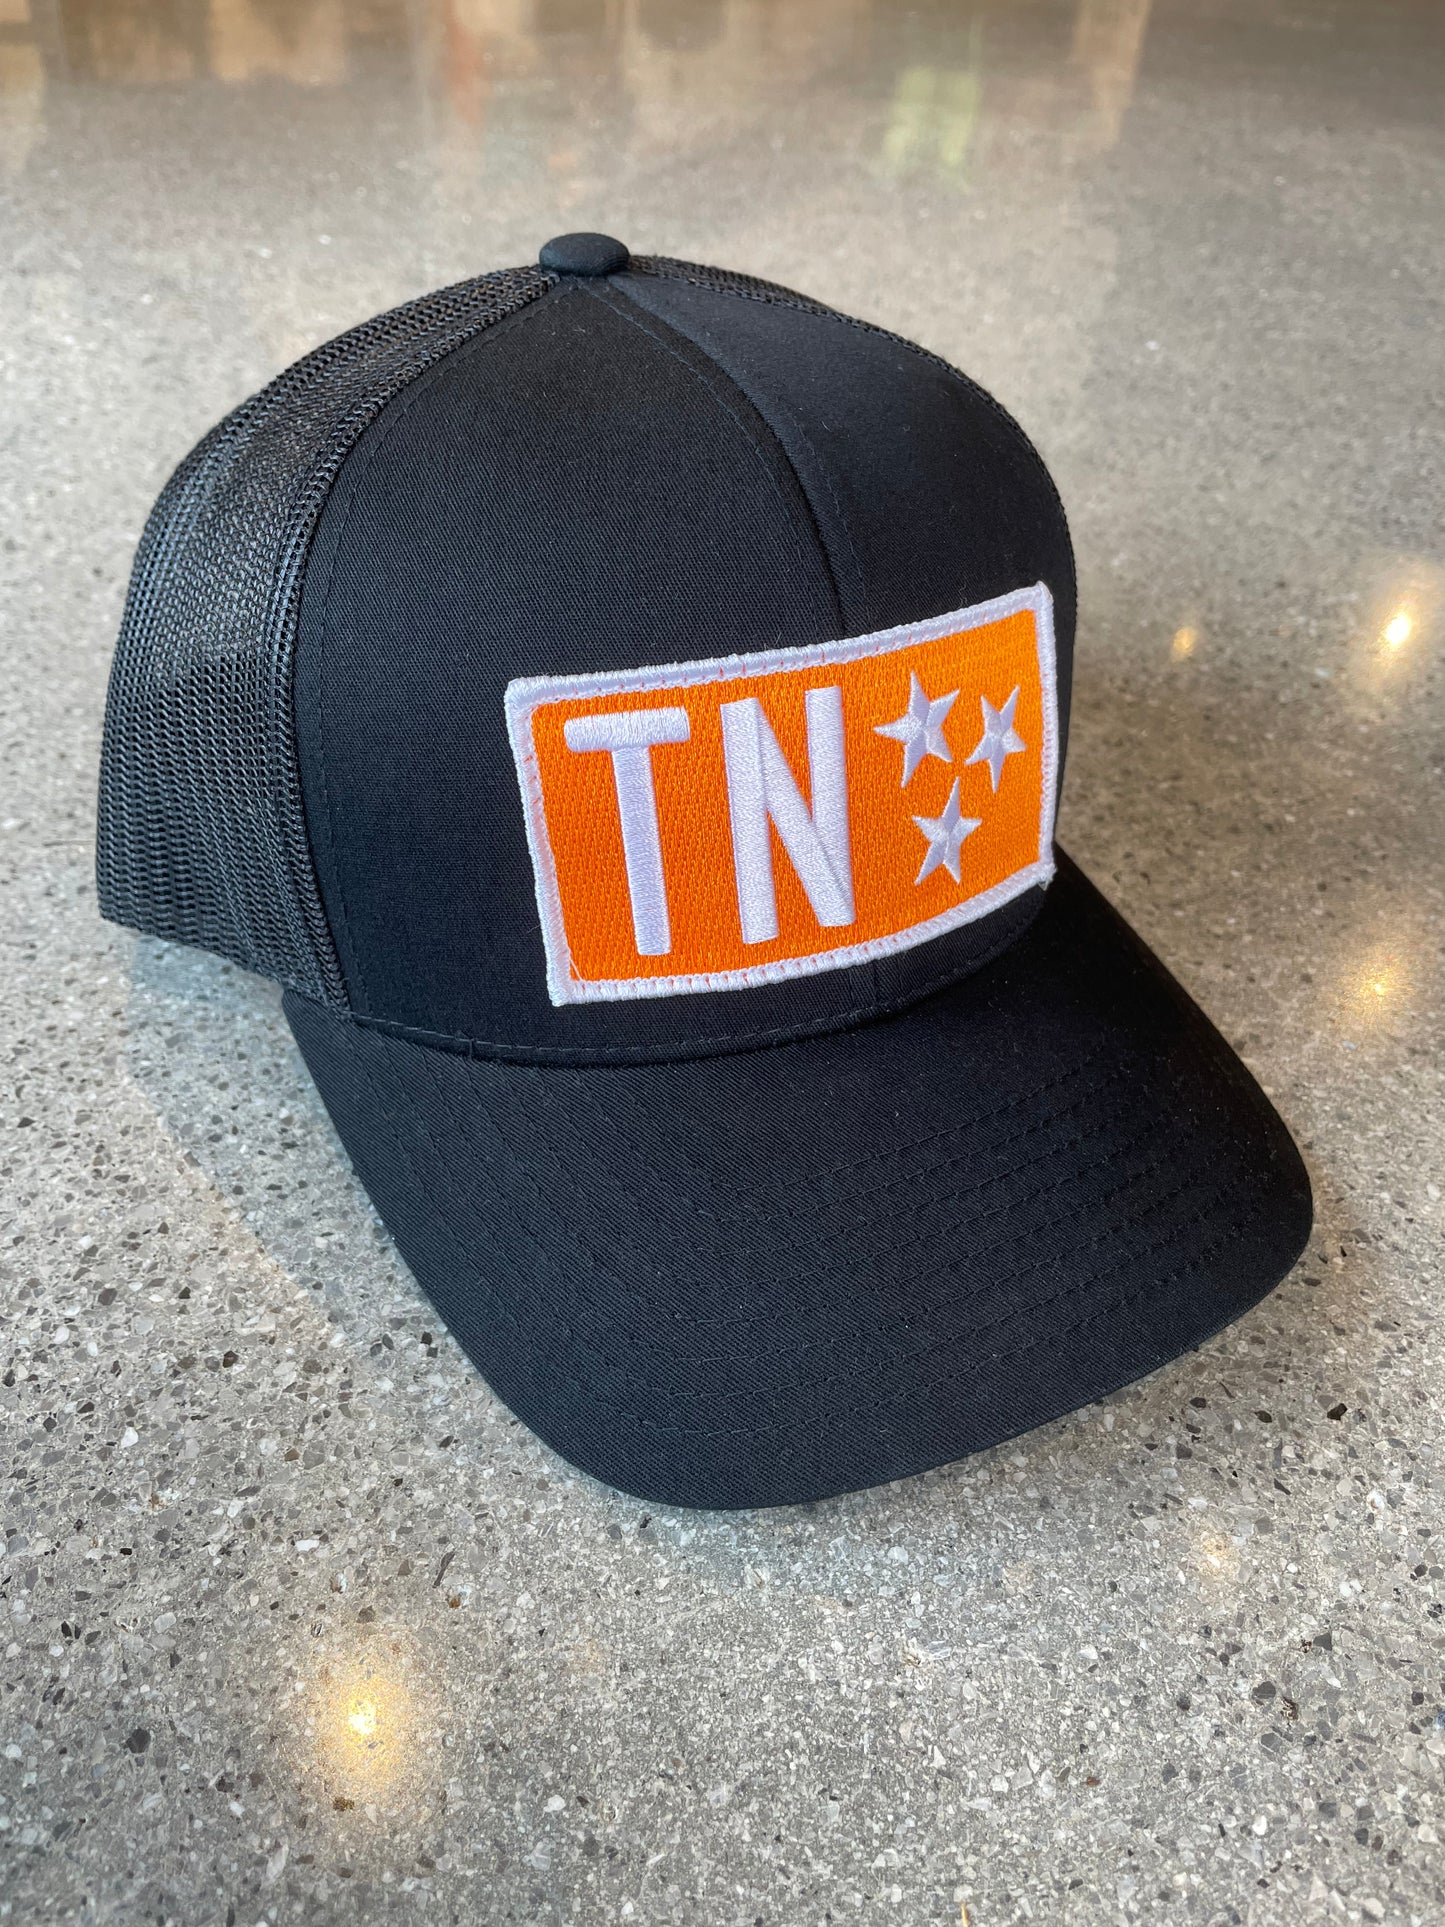 The TN Stars Gameday Trucker Hat - Black